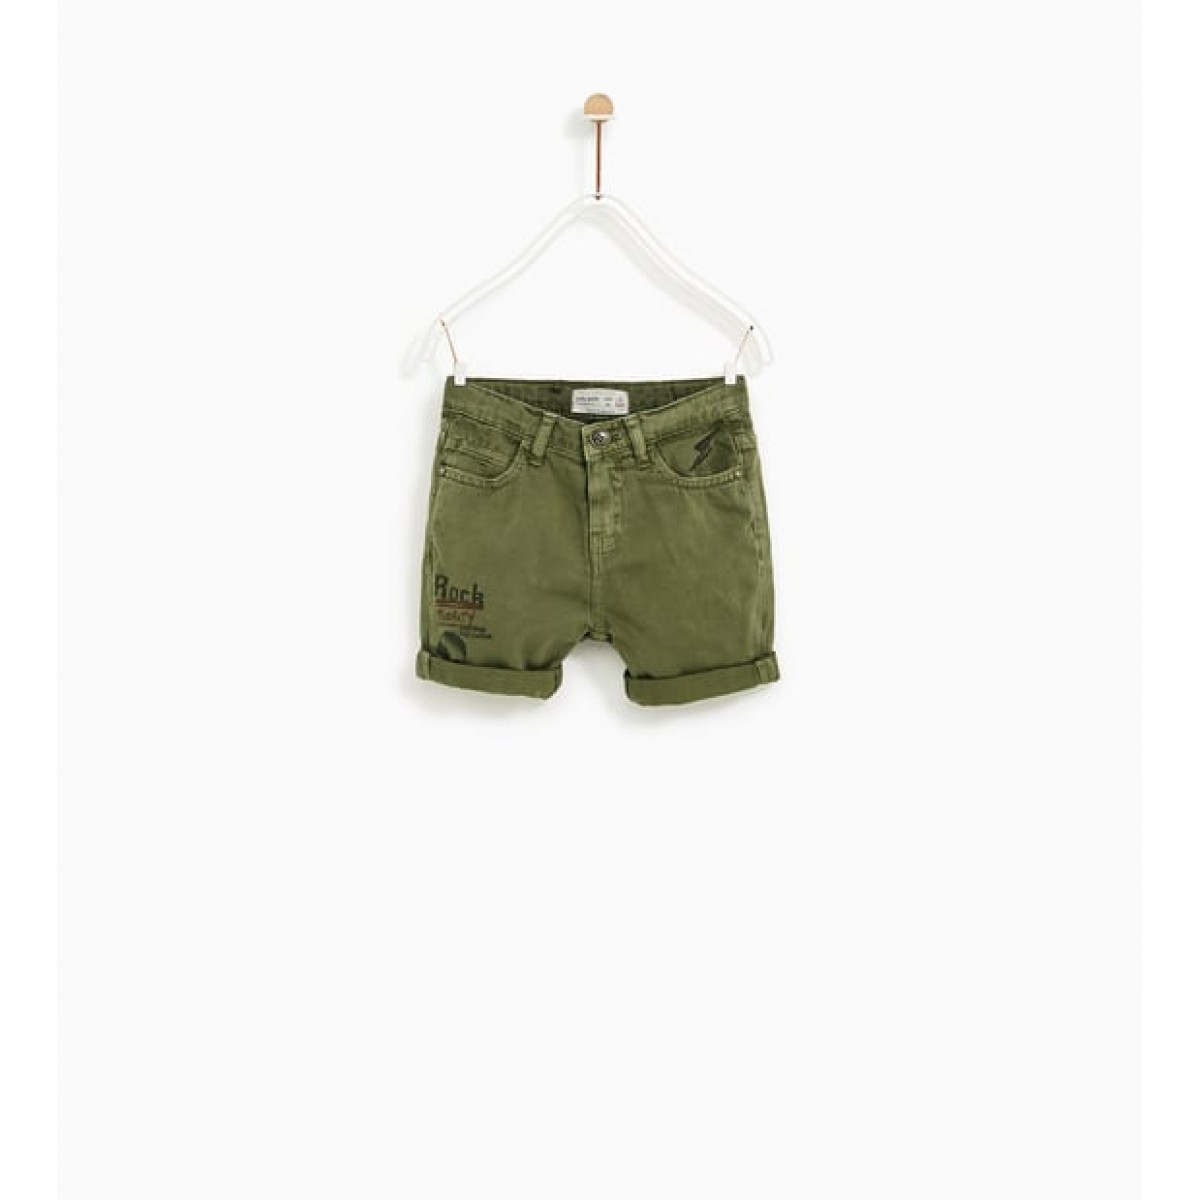 Zara ‘Rock’ Prints Bermuda Shorts